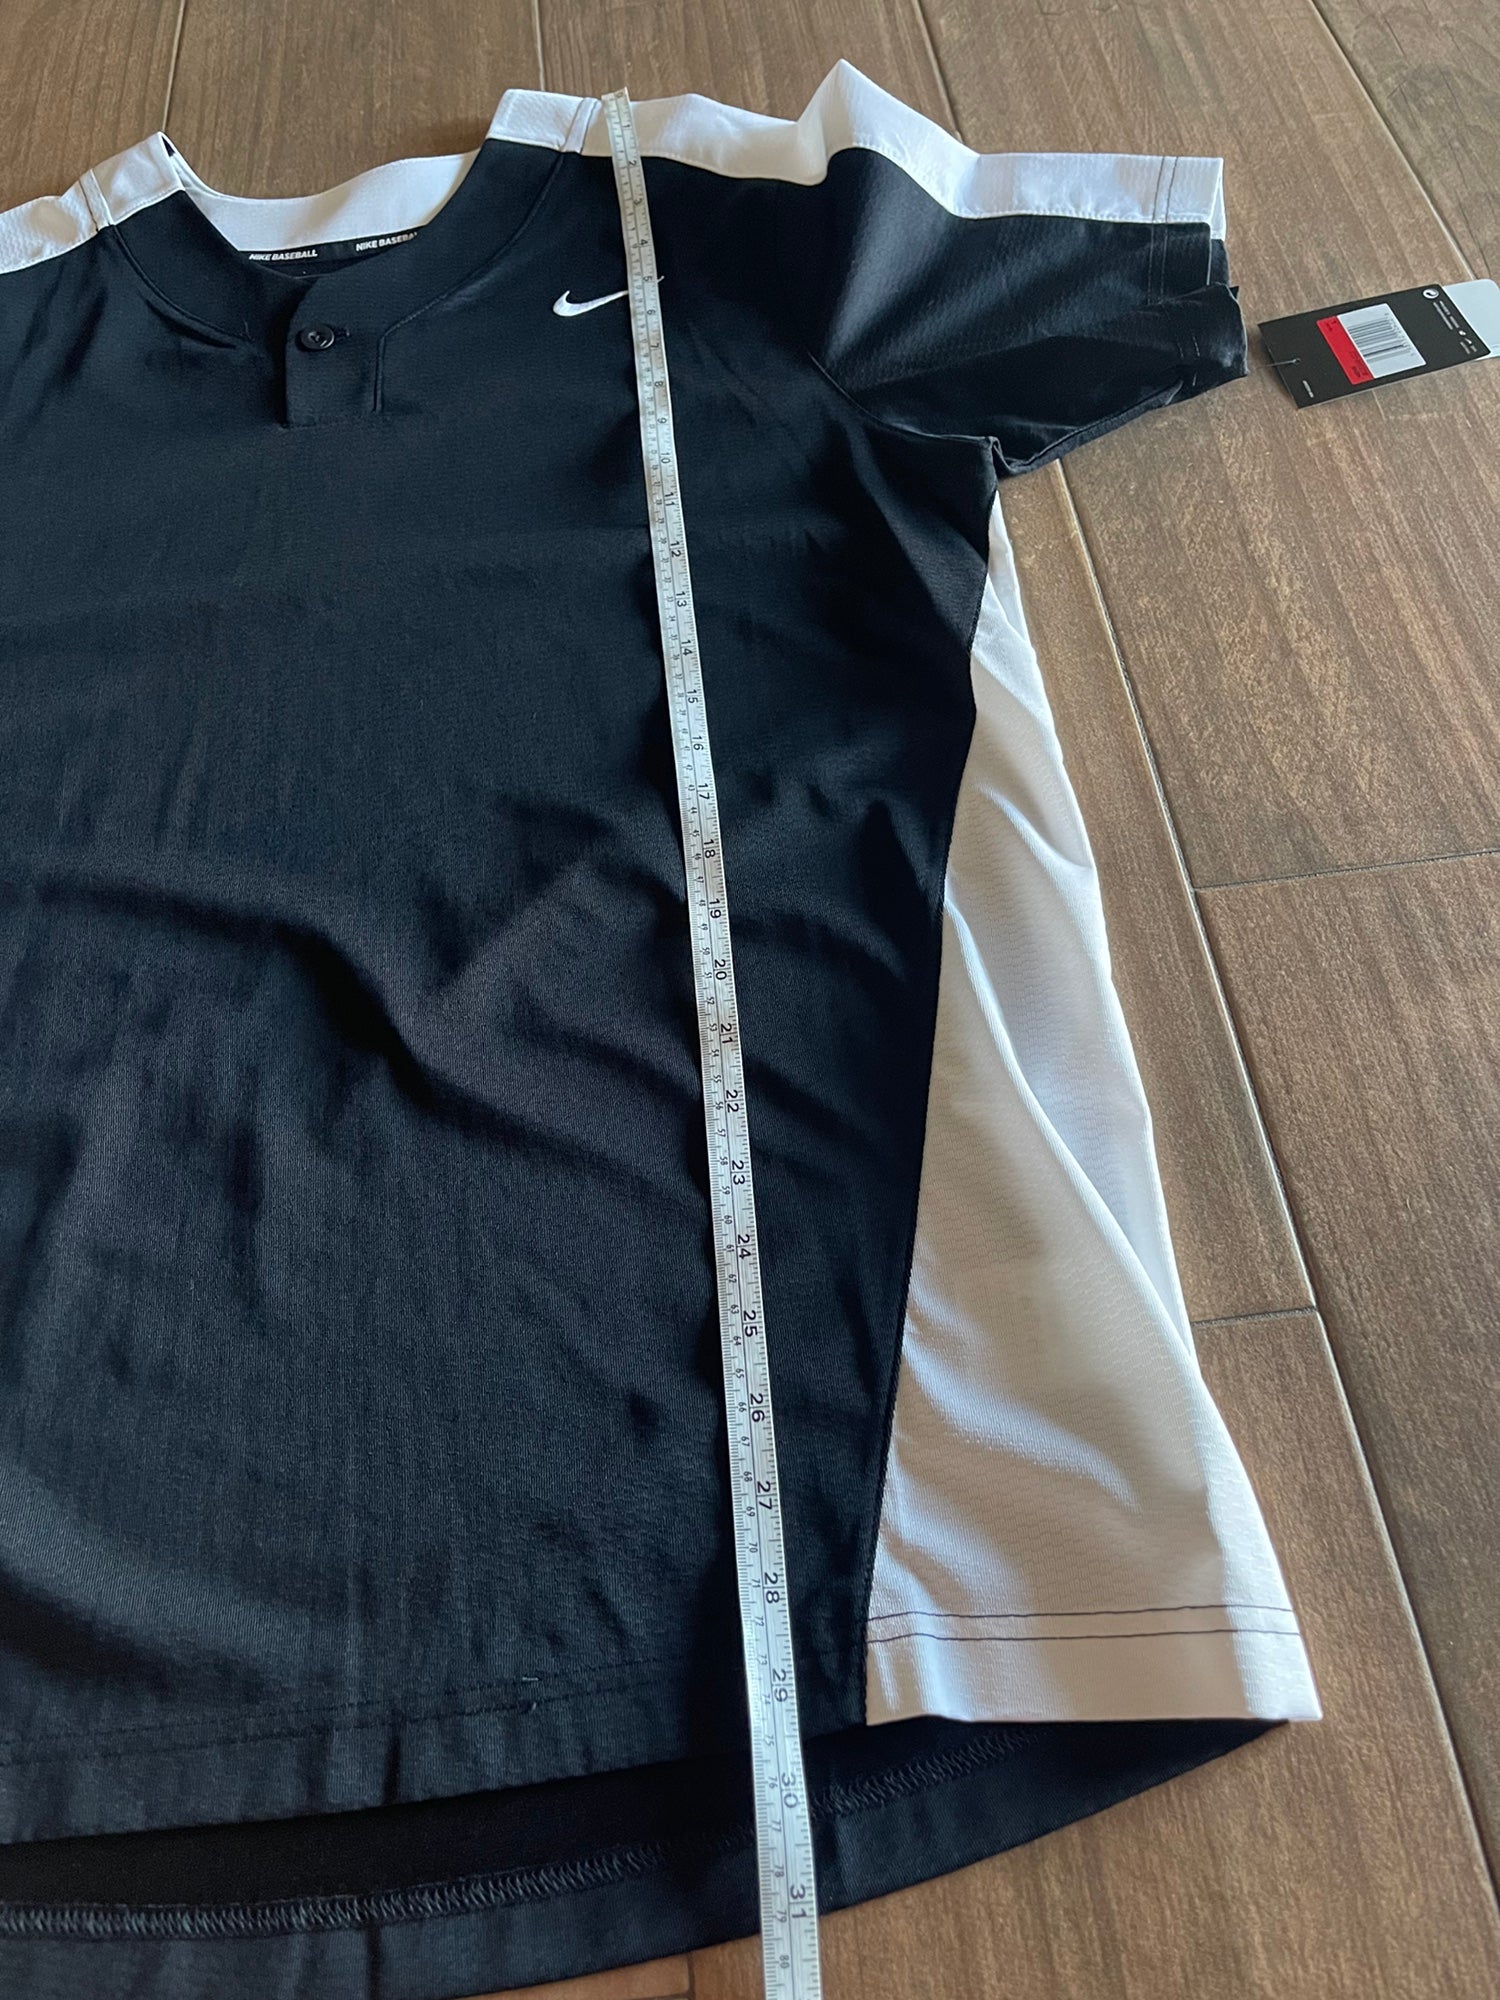 Nike Vapor Select 1-Button Jersey